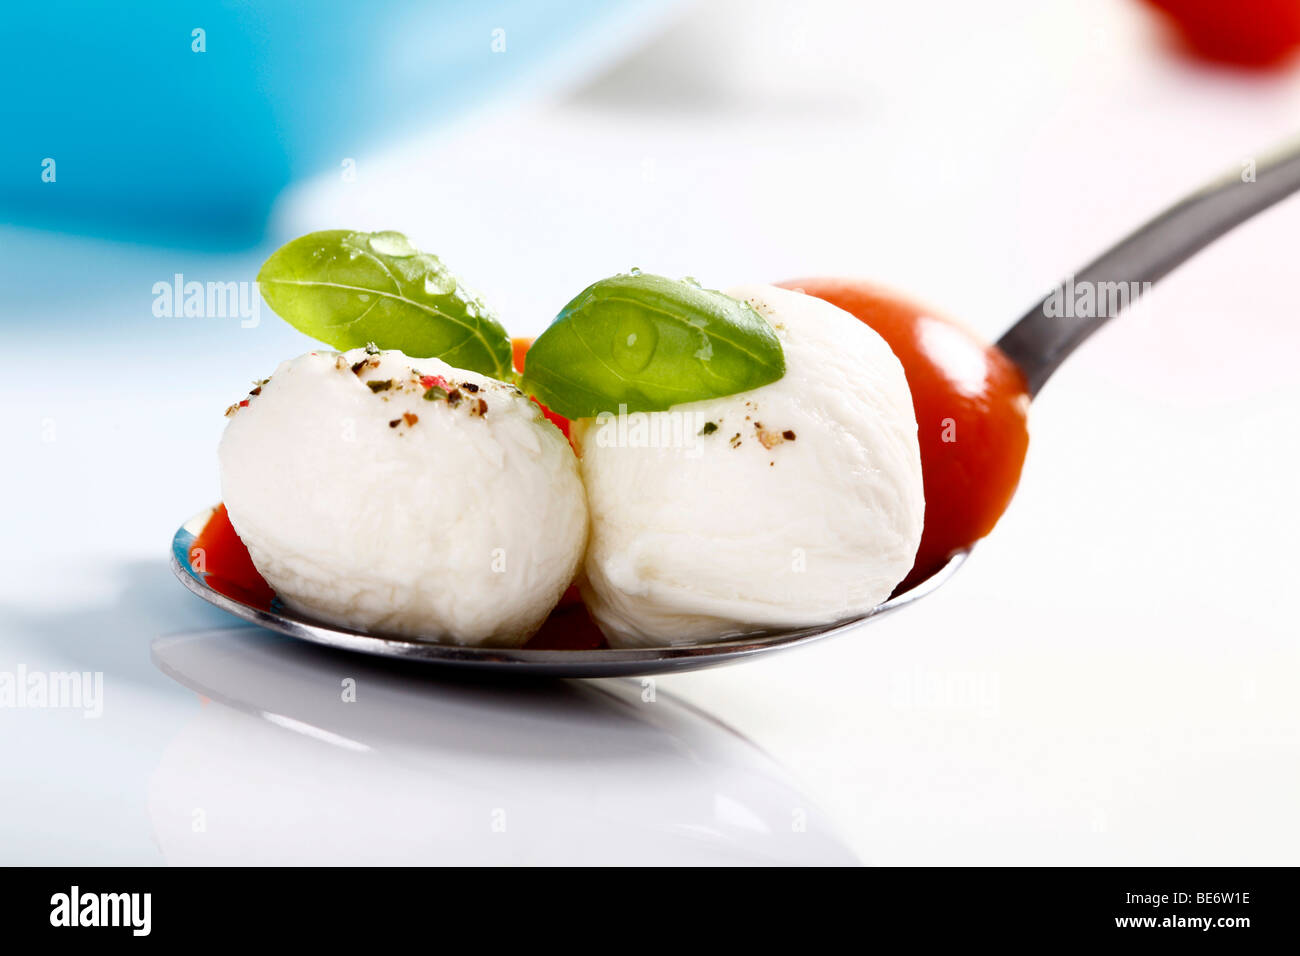 Mozzarella balls with tomatoes and basil Stock Photo